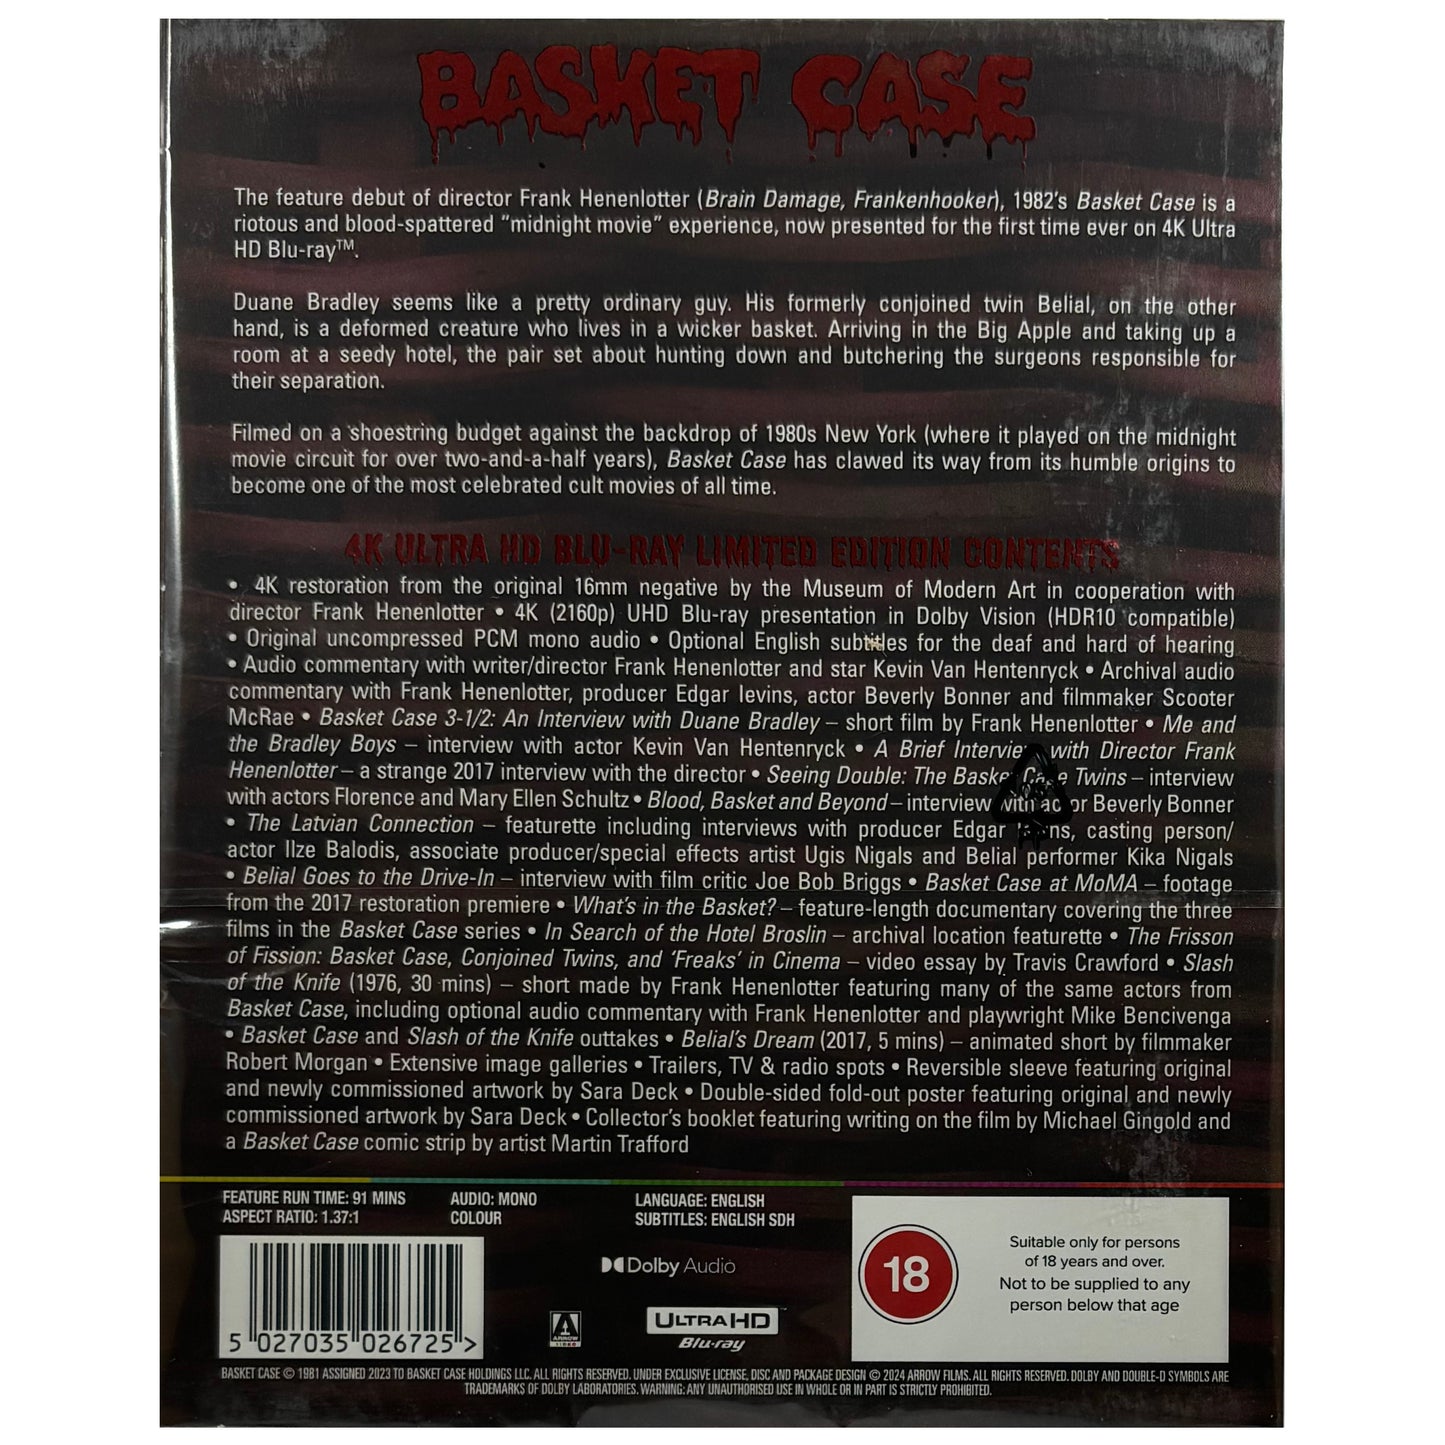 Basket Case 4K Ultra-HD Blu-Ray - Limited Edition